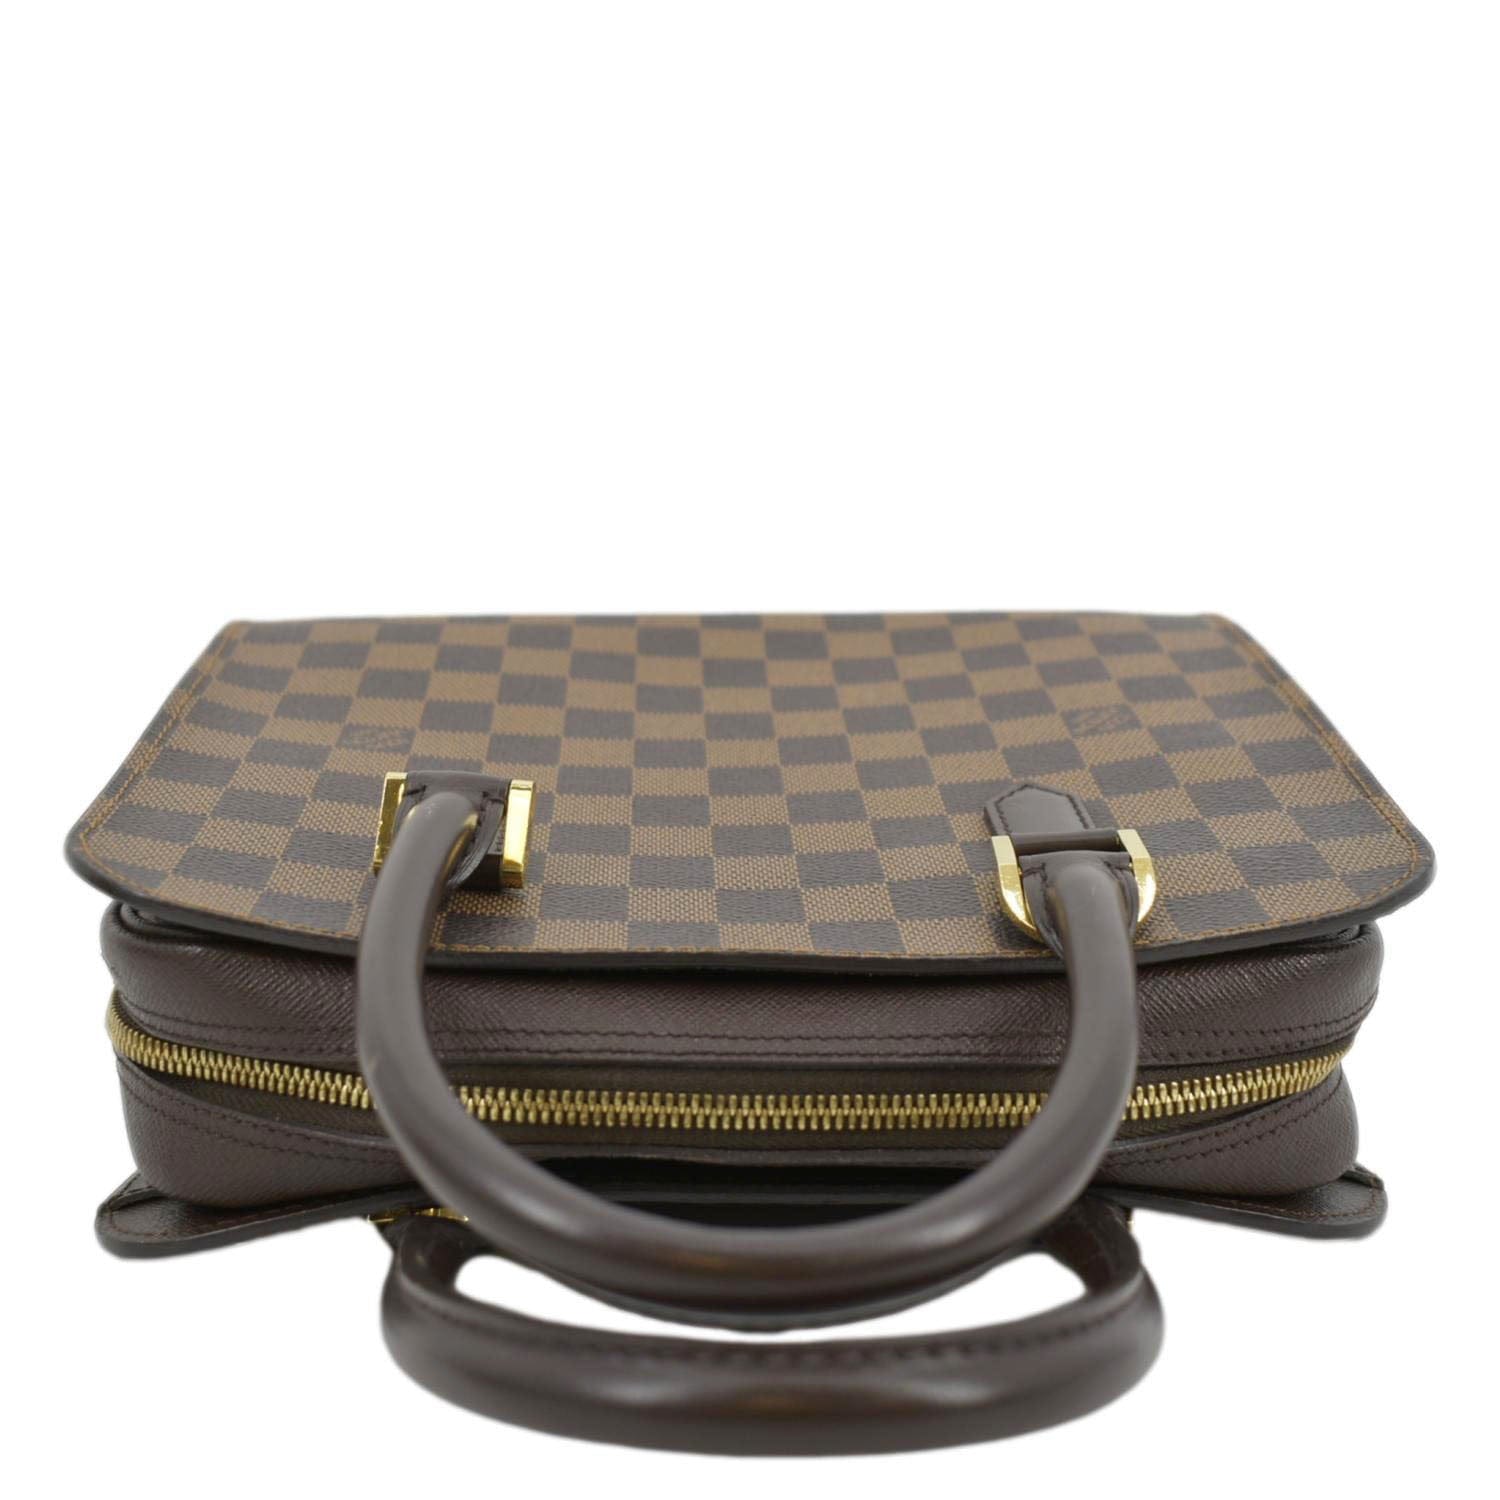 Louis Vuitton Damier Ebene Triana PM - Brown Handle Bags, Handbags